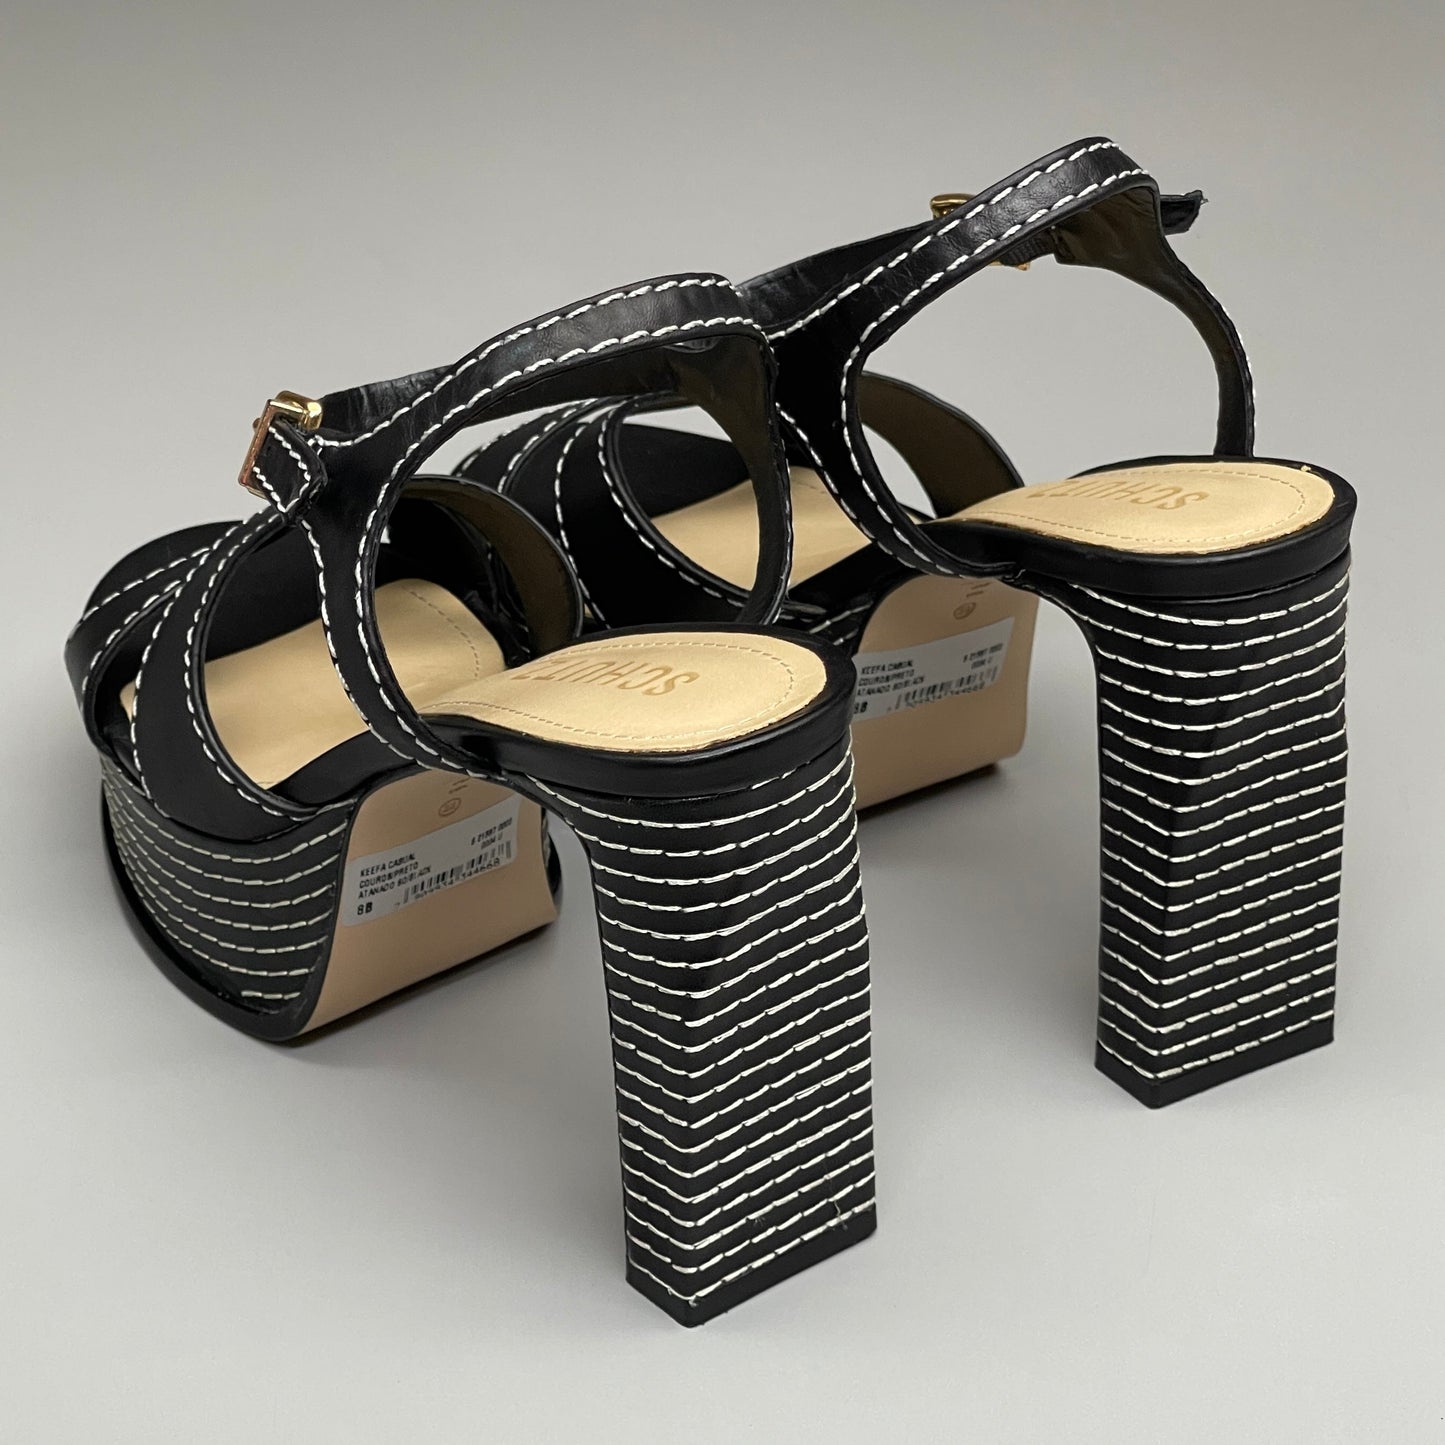 SCHUTZ Keefa Casual Women's Leather Sandal Black Platform 4" Heel Shoes Sz 5B (New)